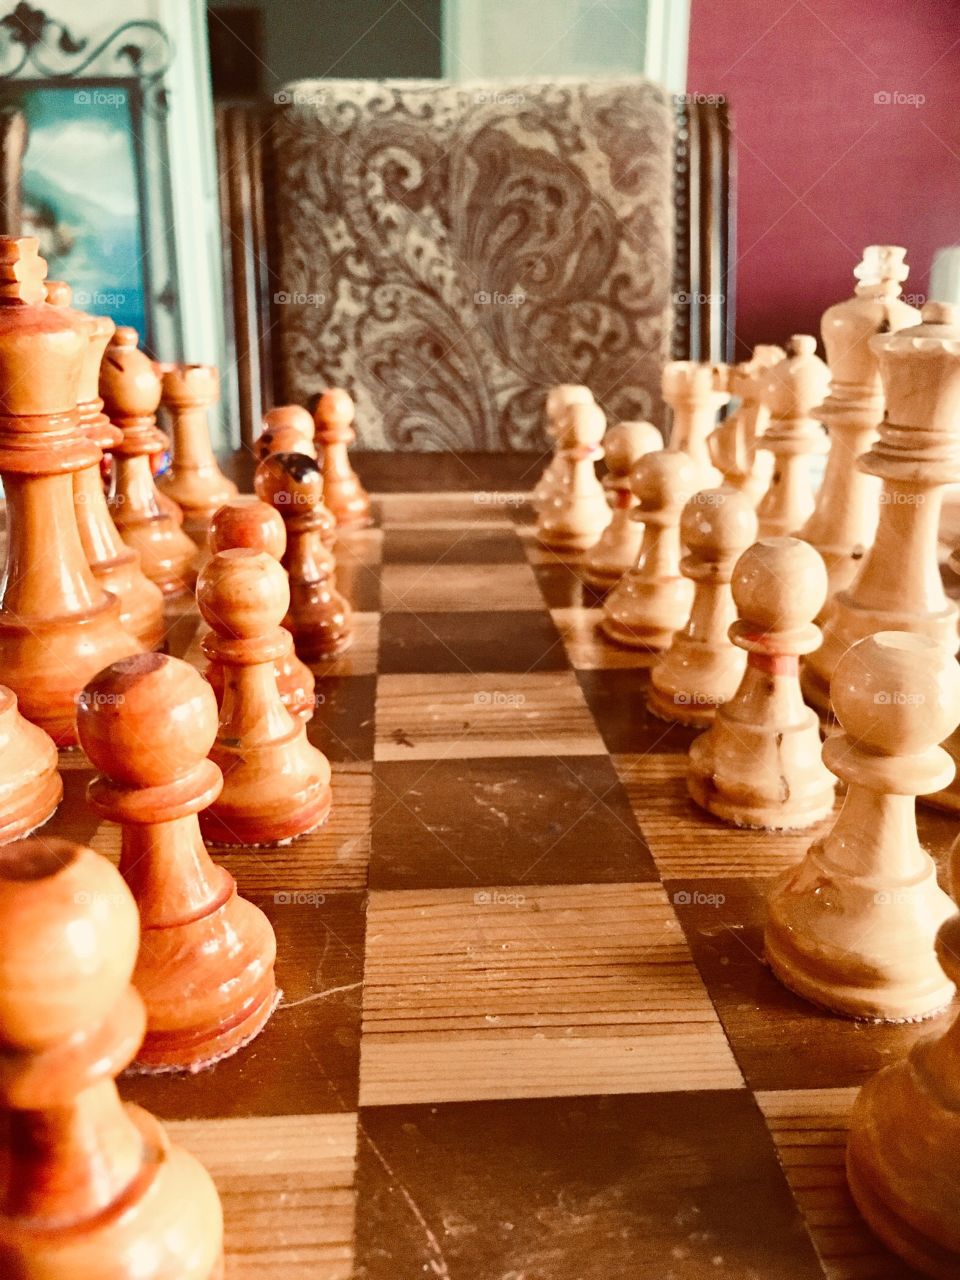 The Secret Life of Chess